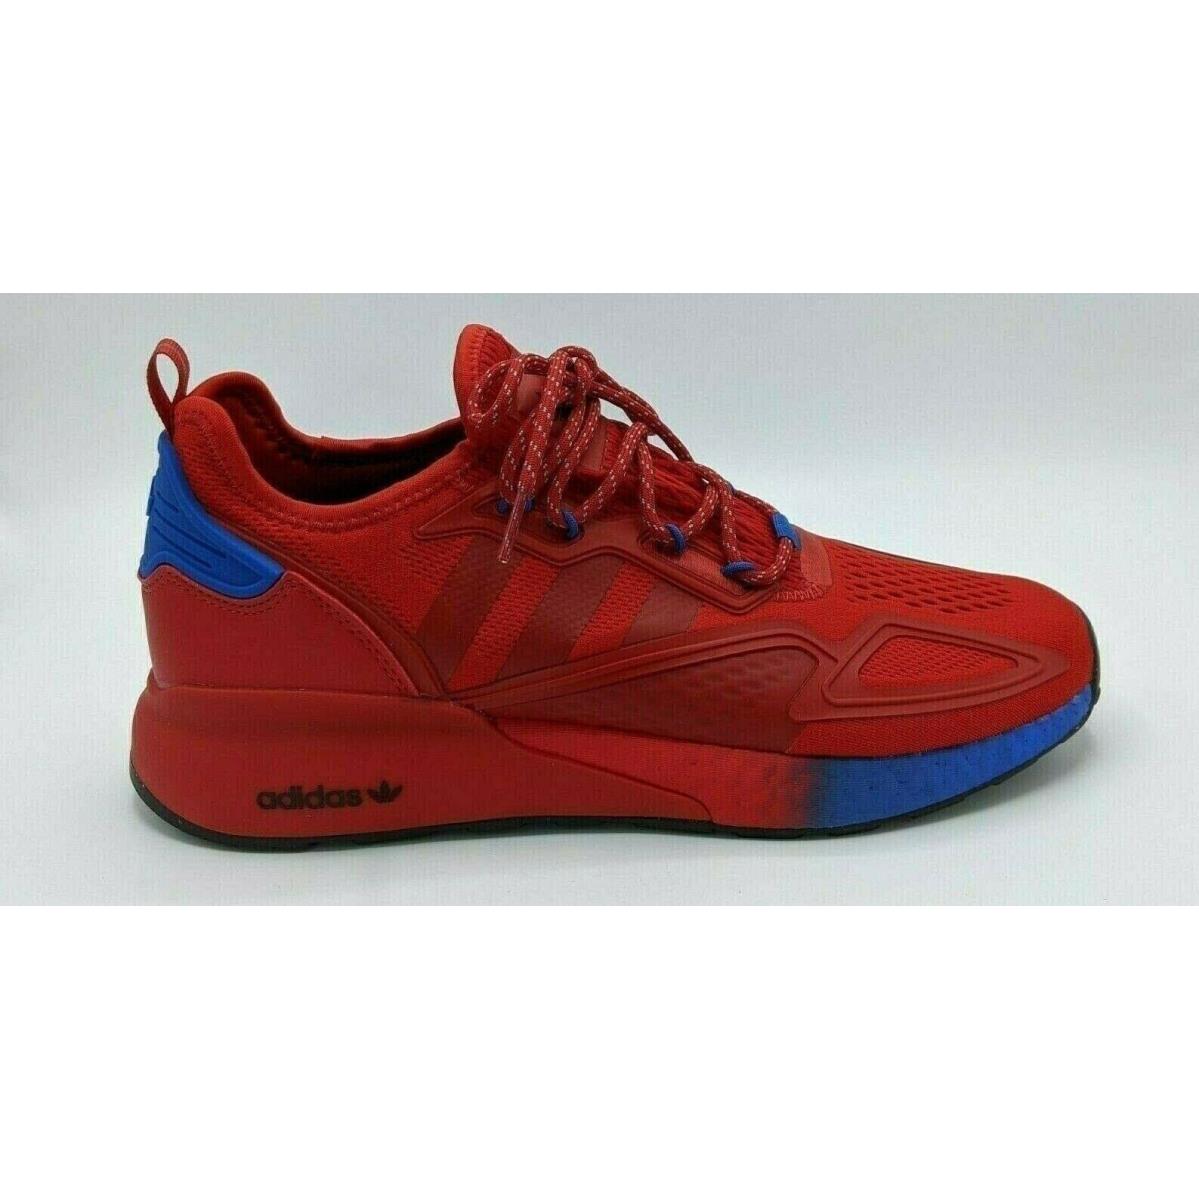 Adidas shoes Originals Boost - Blue, Red 4